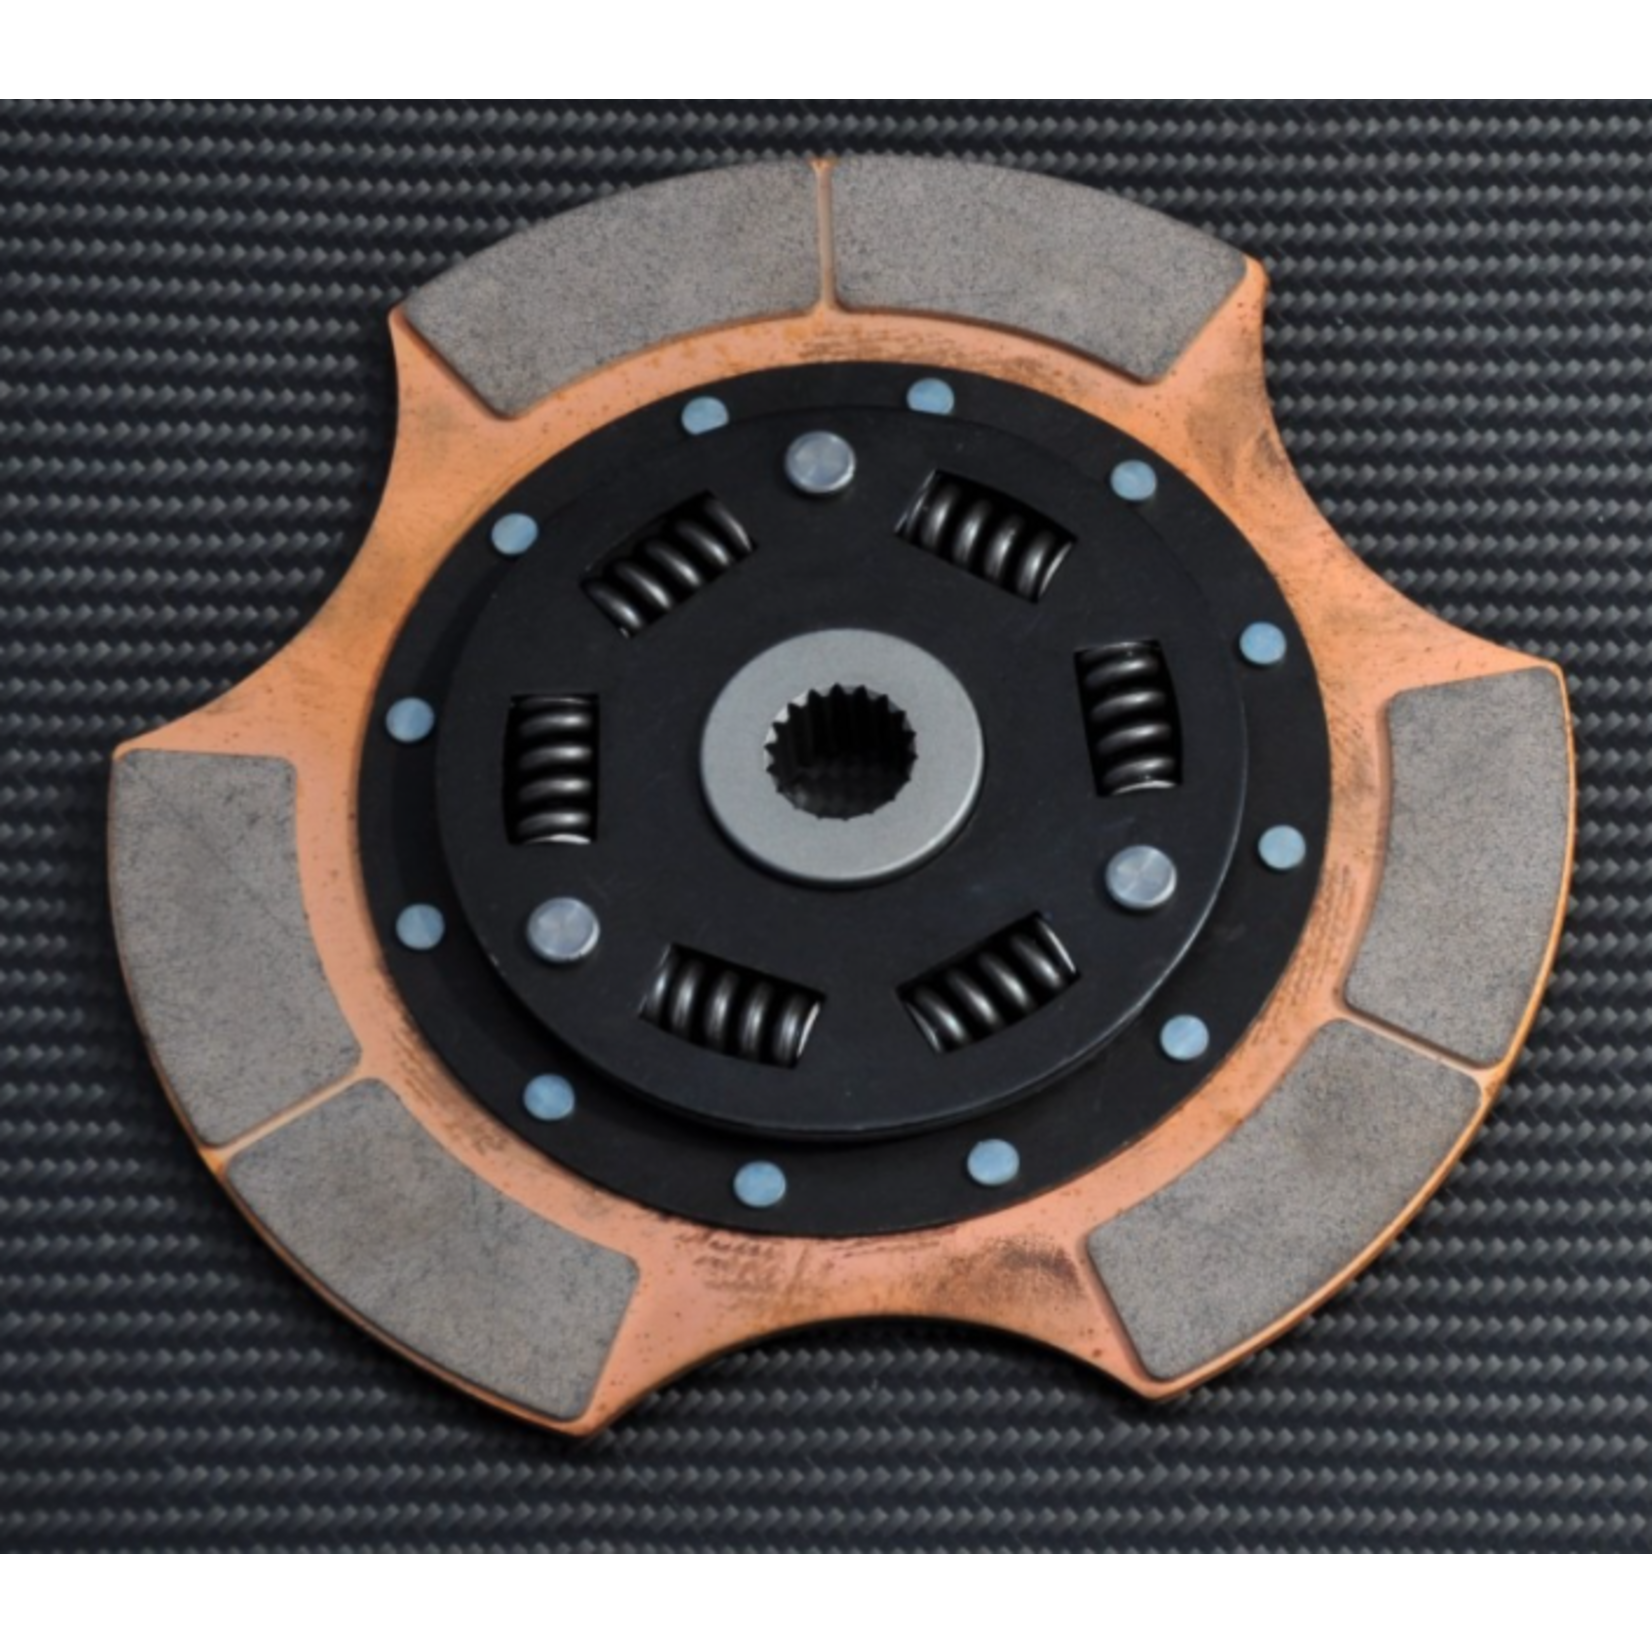 RSX sintered clutch disc MA sprung hub